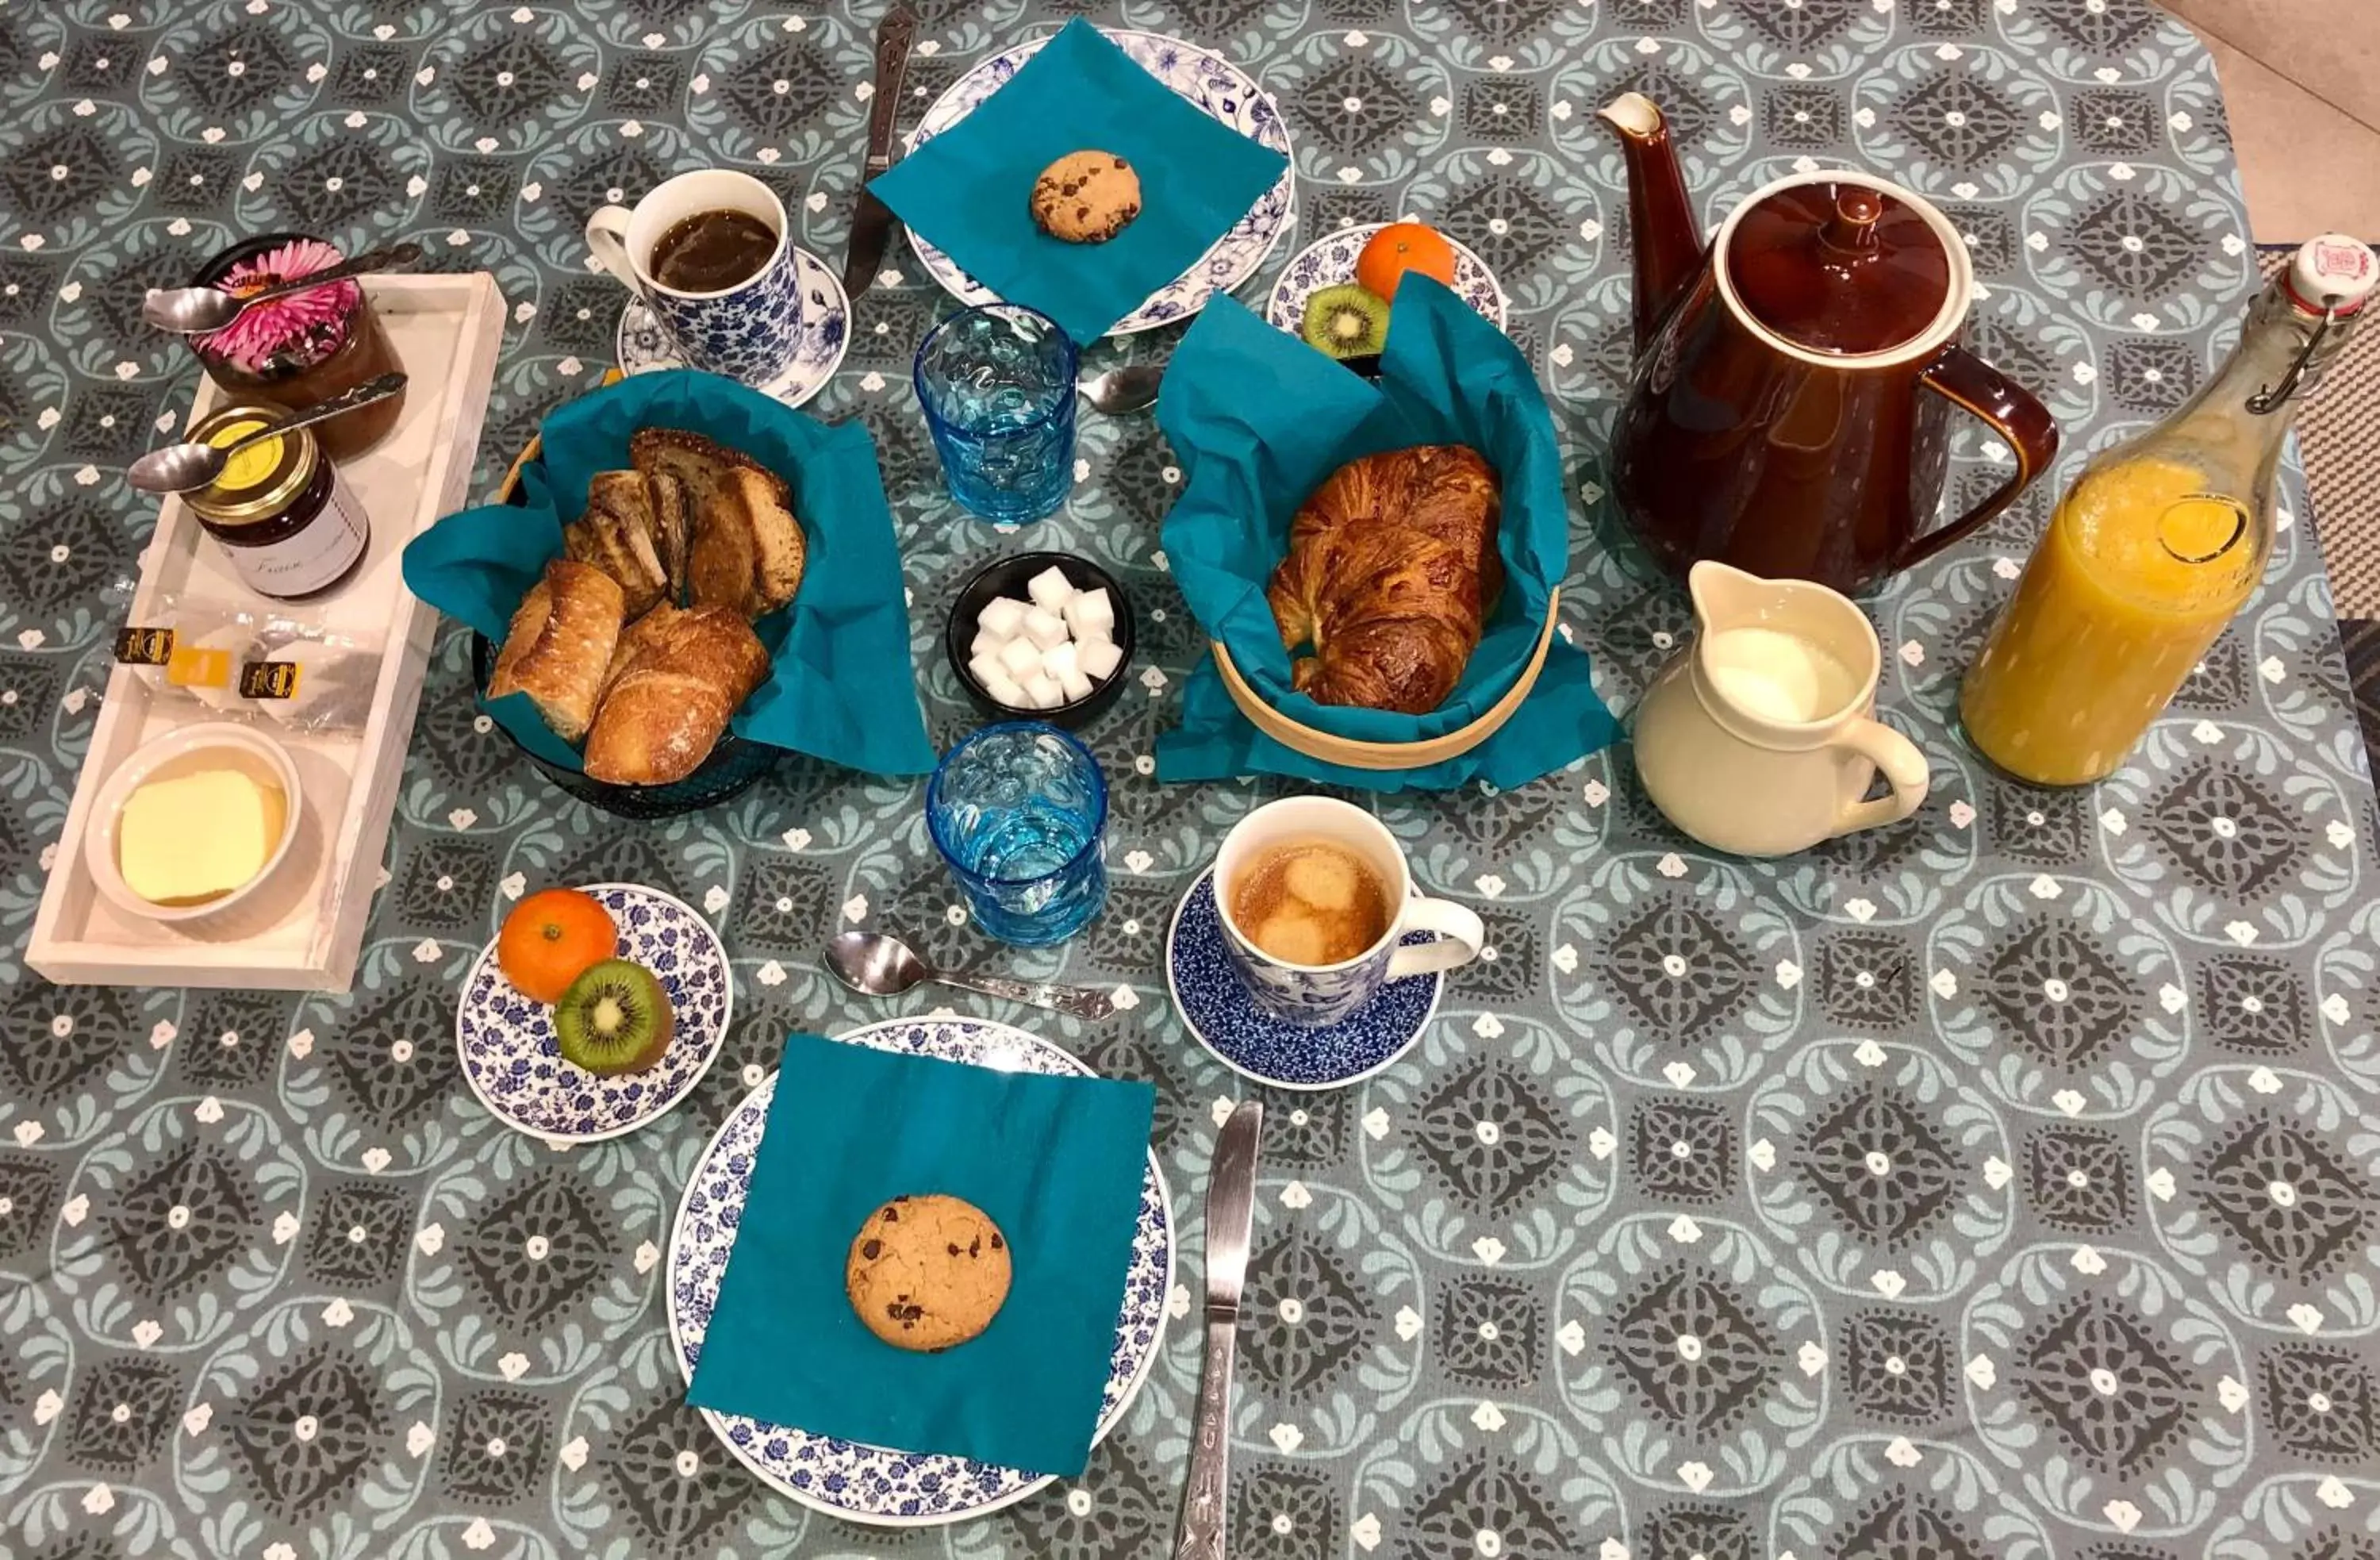 Breakfast in Cookie home